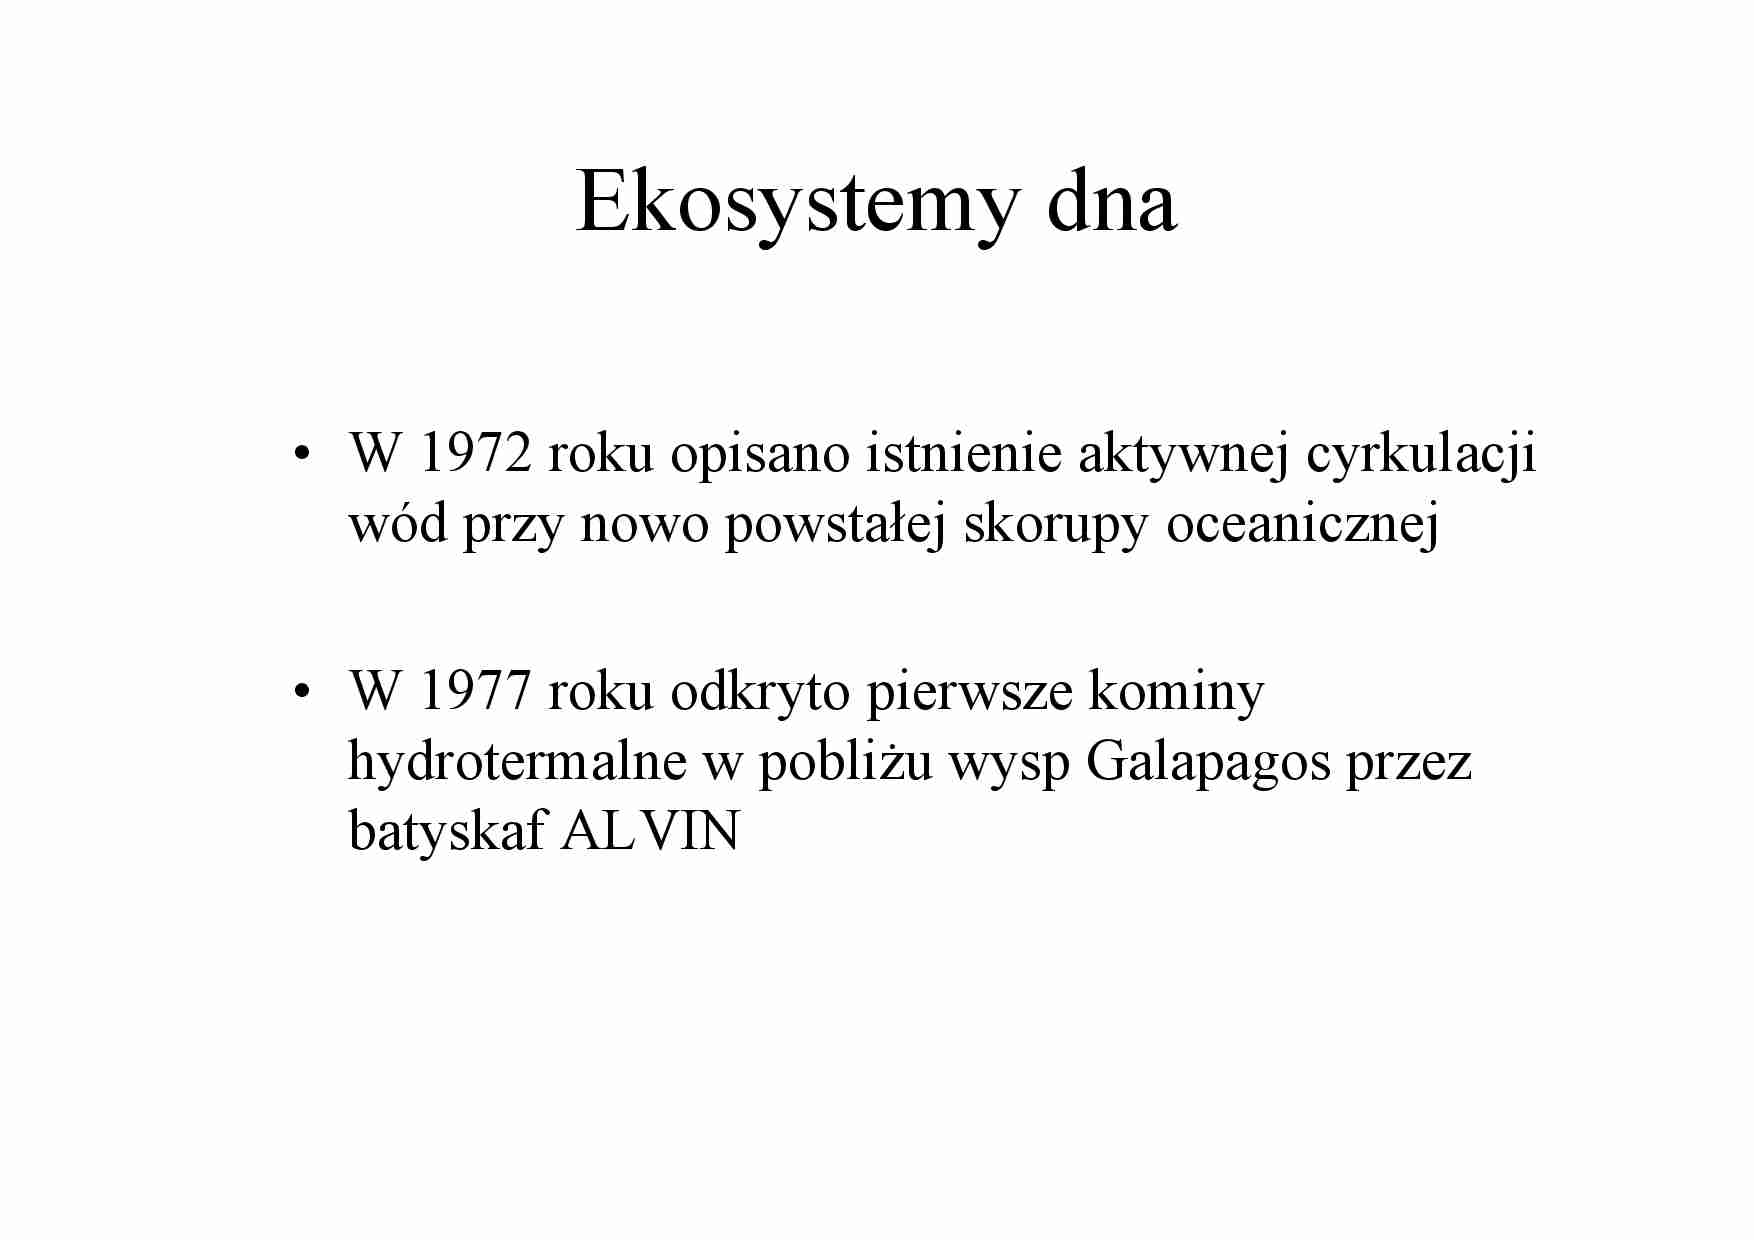 Ekosystemy DNA - strona 1